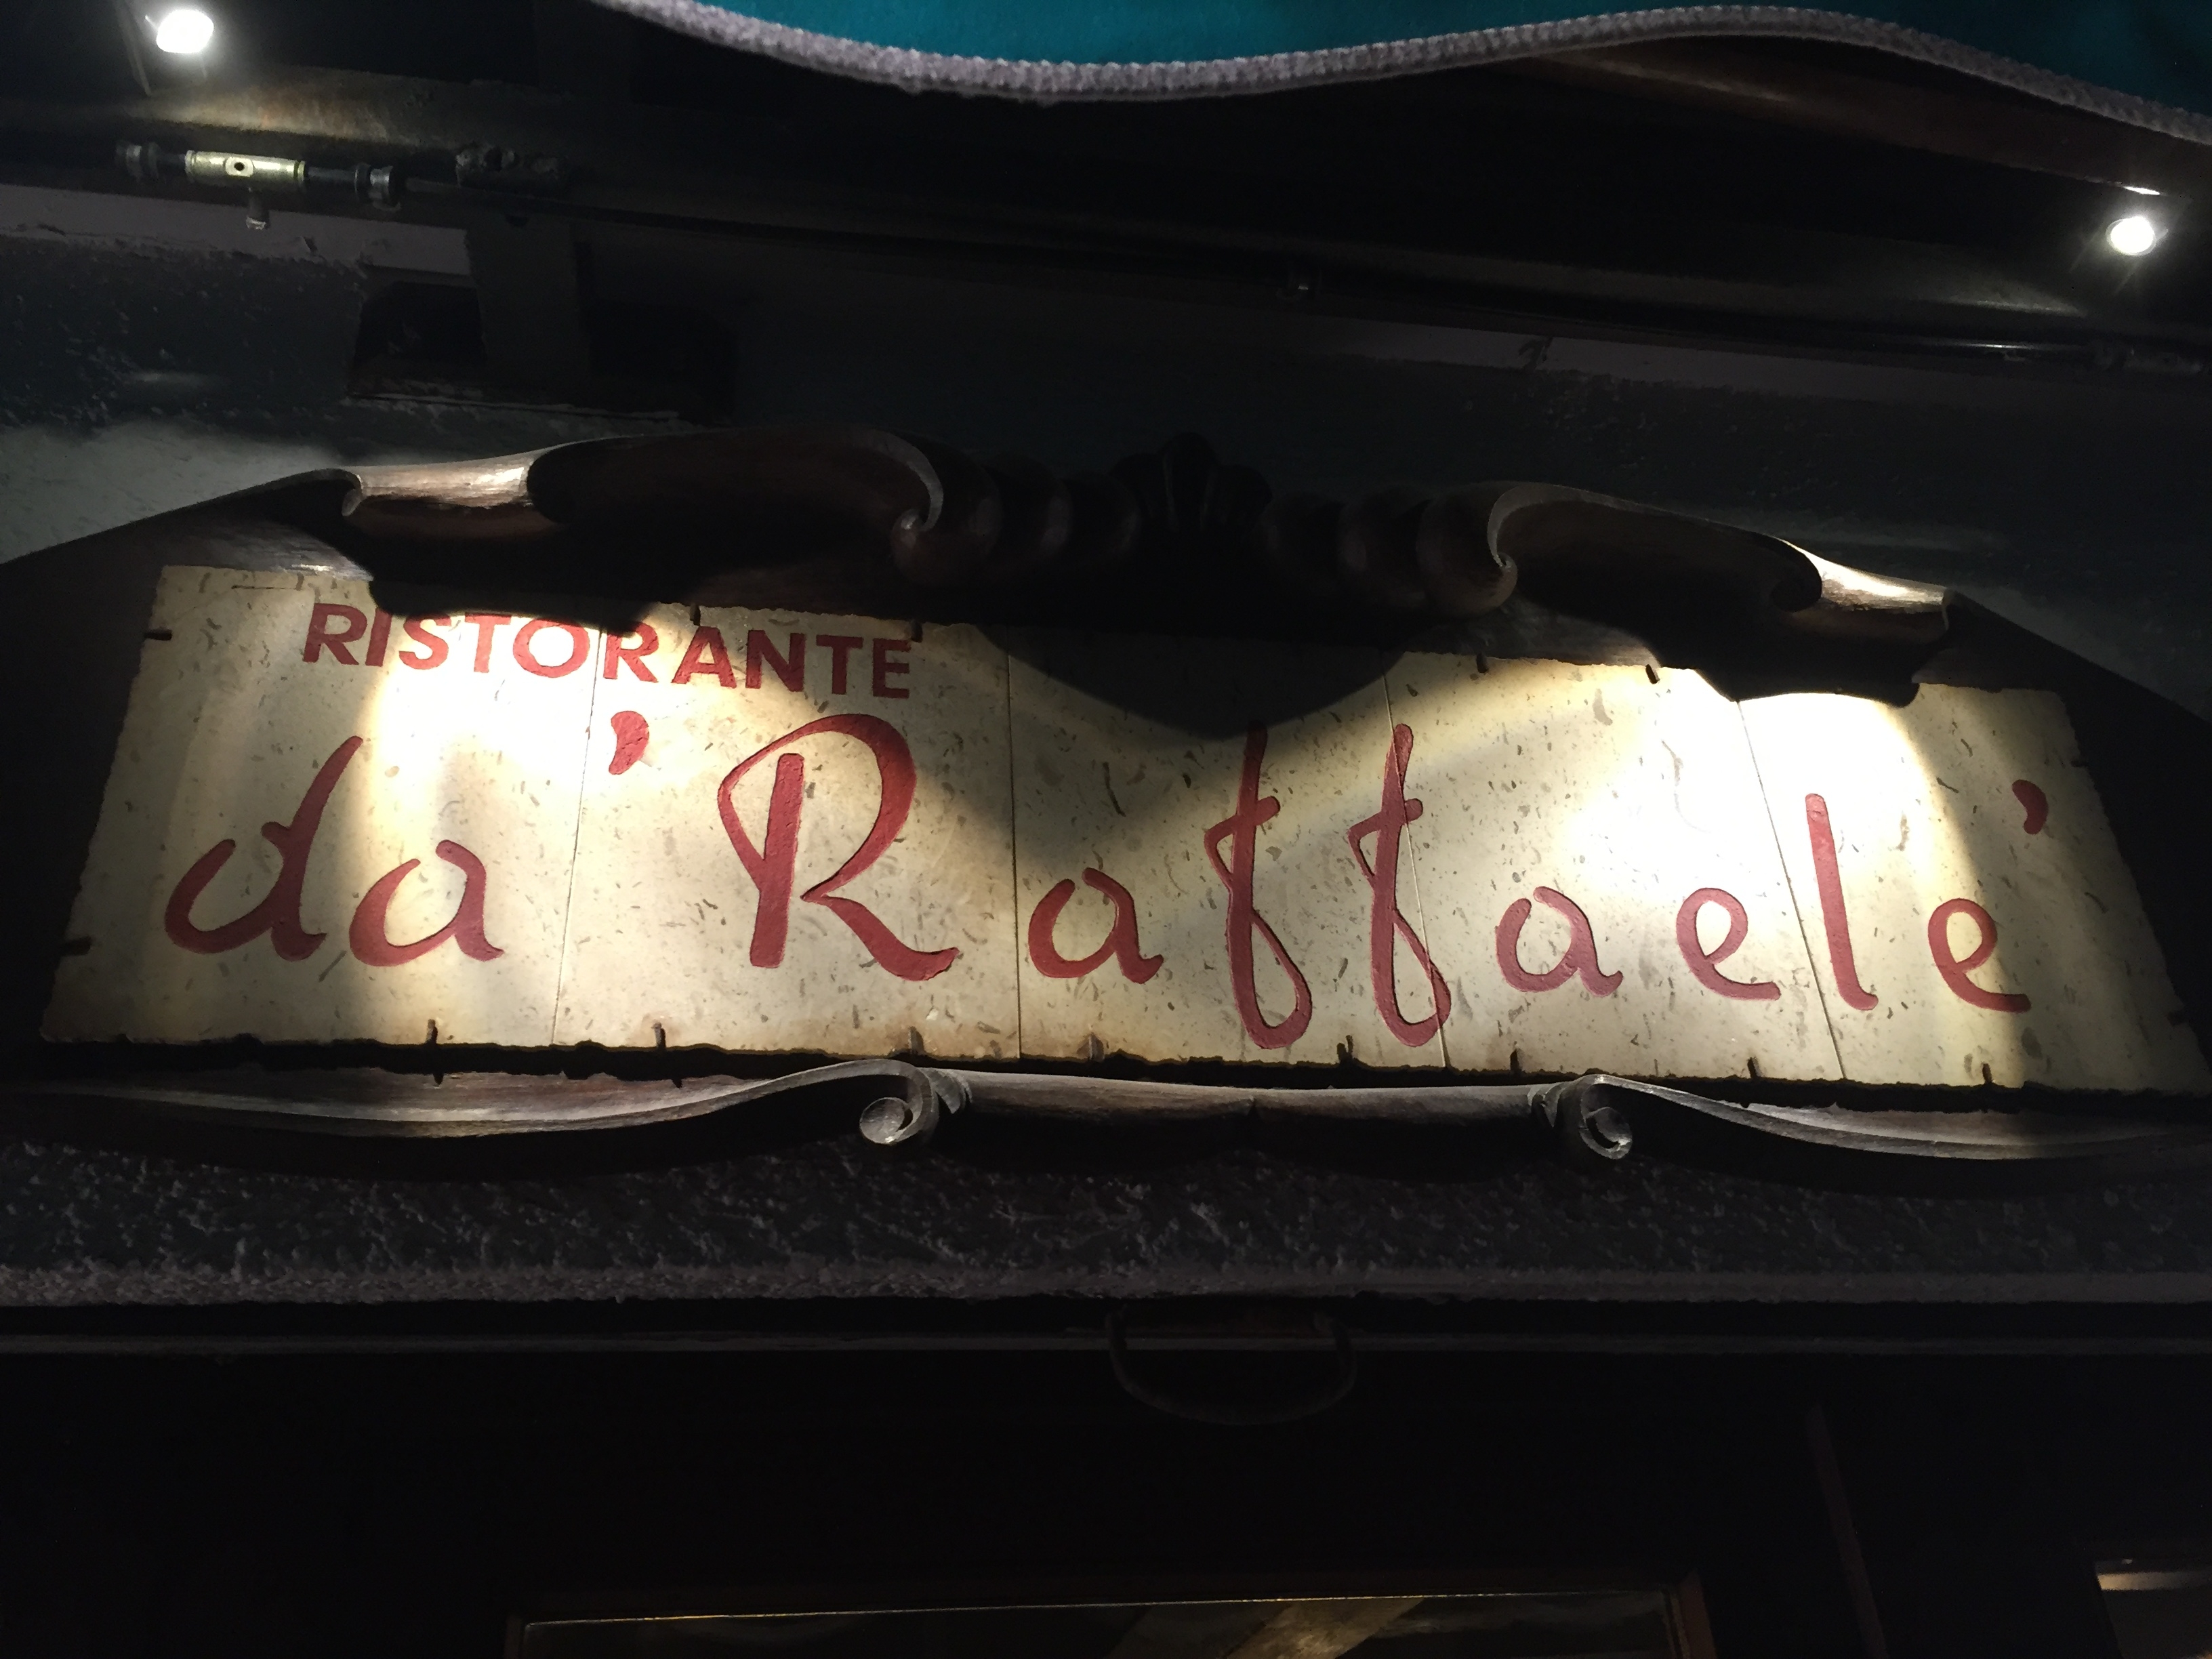 Travelers find history, romance, fine food, and great service at Ristorante da Raffaele in Venice.